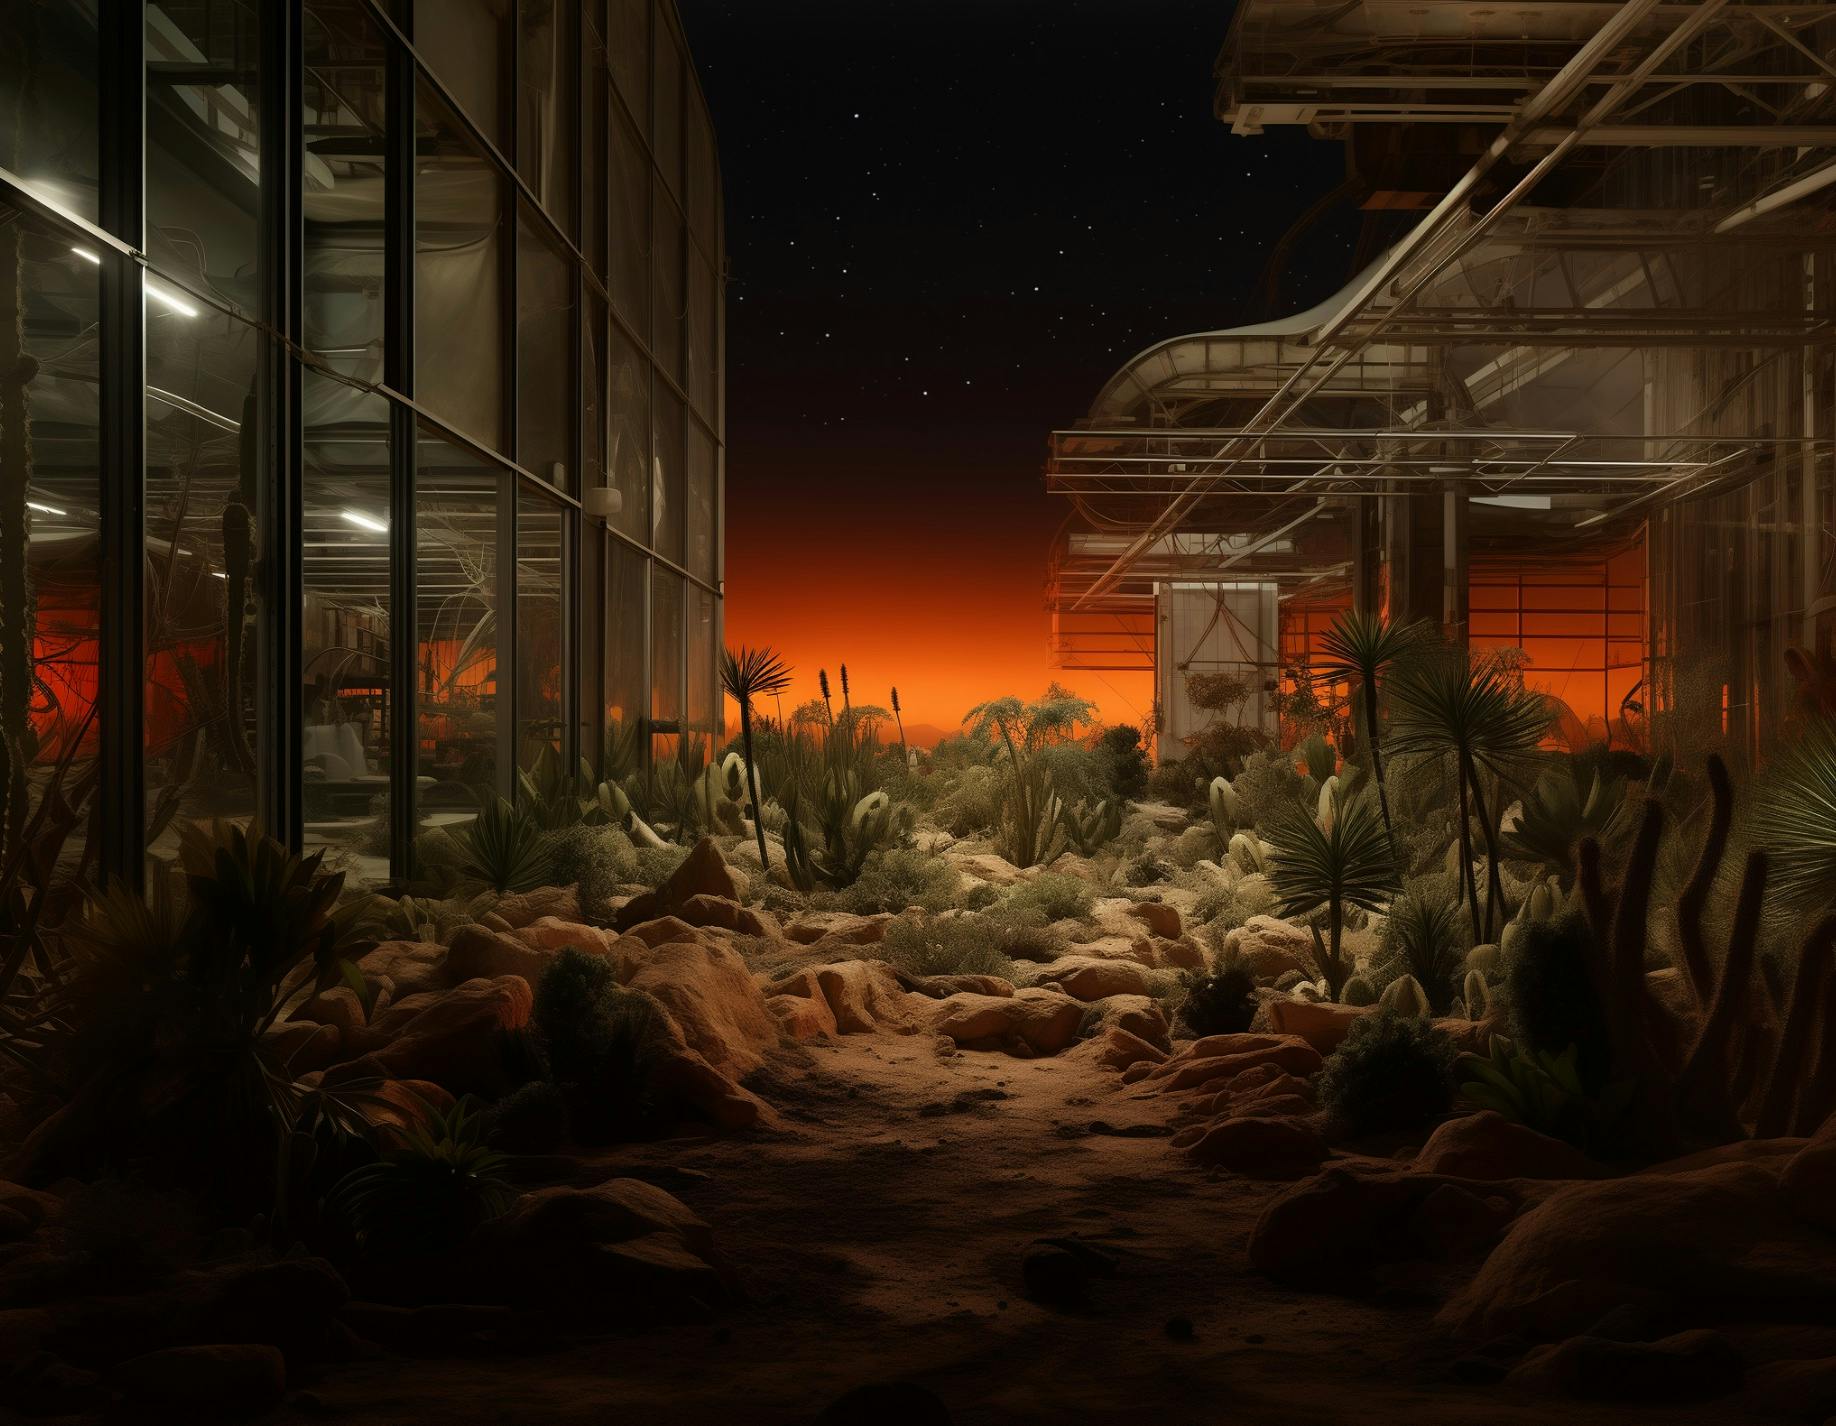 Futuristic desert scene